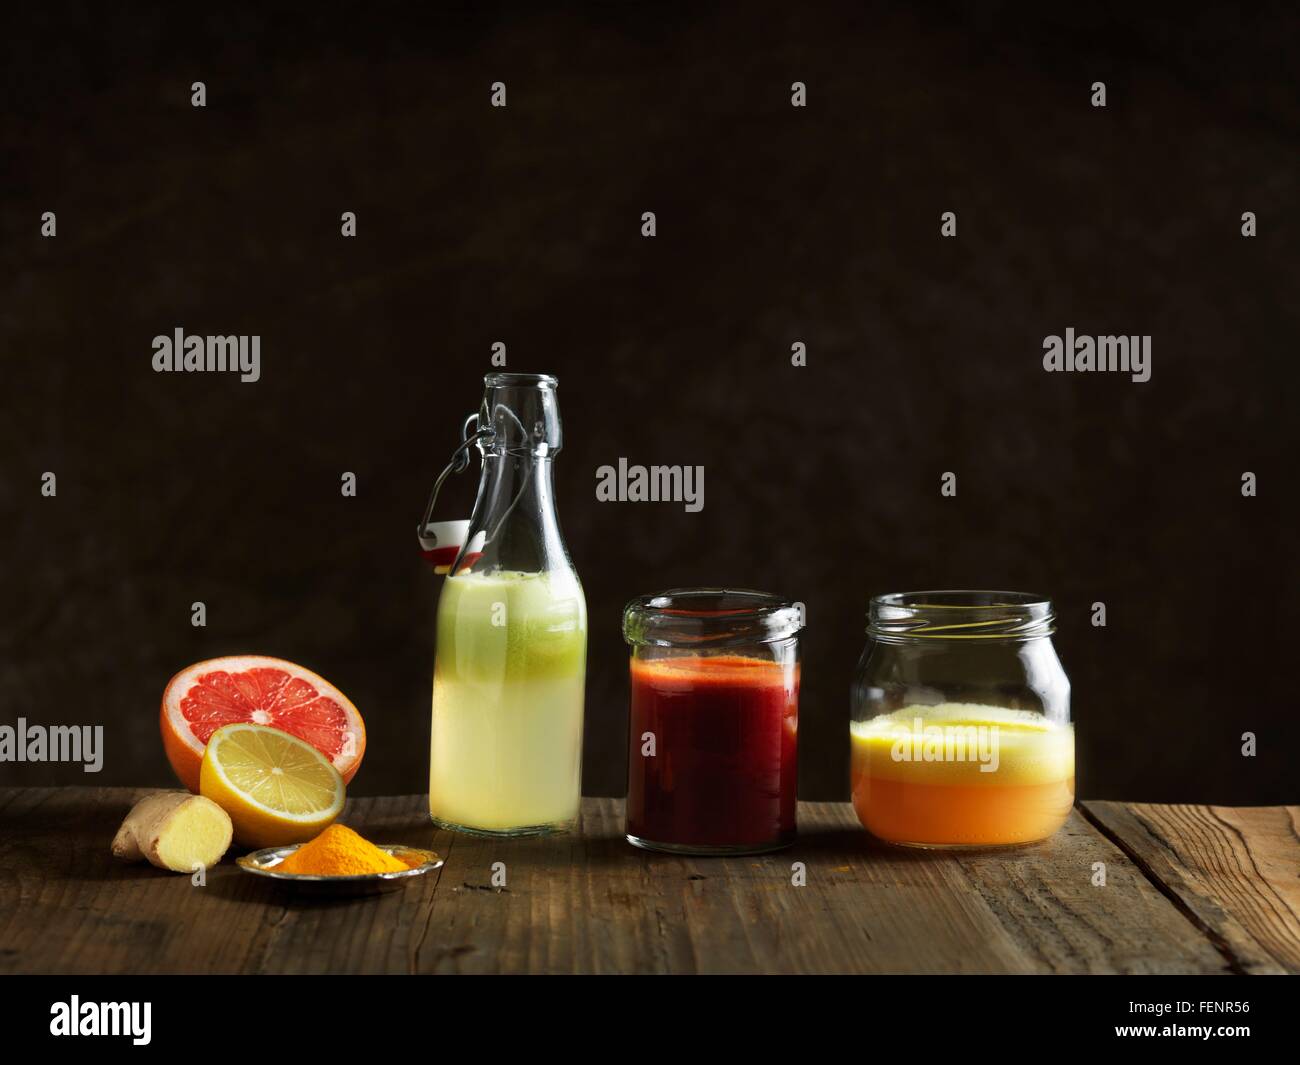 https://c8.alamy.com/comp/FENR56/raw-juices-in-glass-bottle-and-jars-dark-background-FENR56.jpg